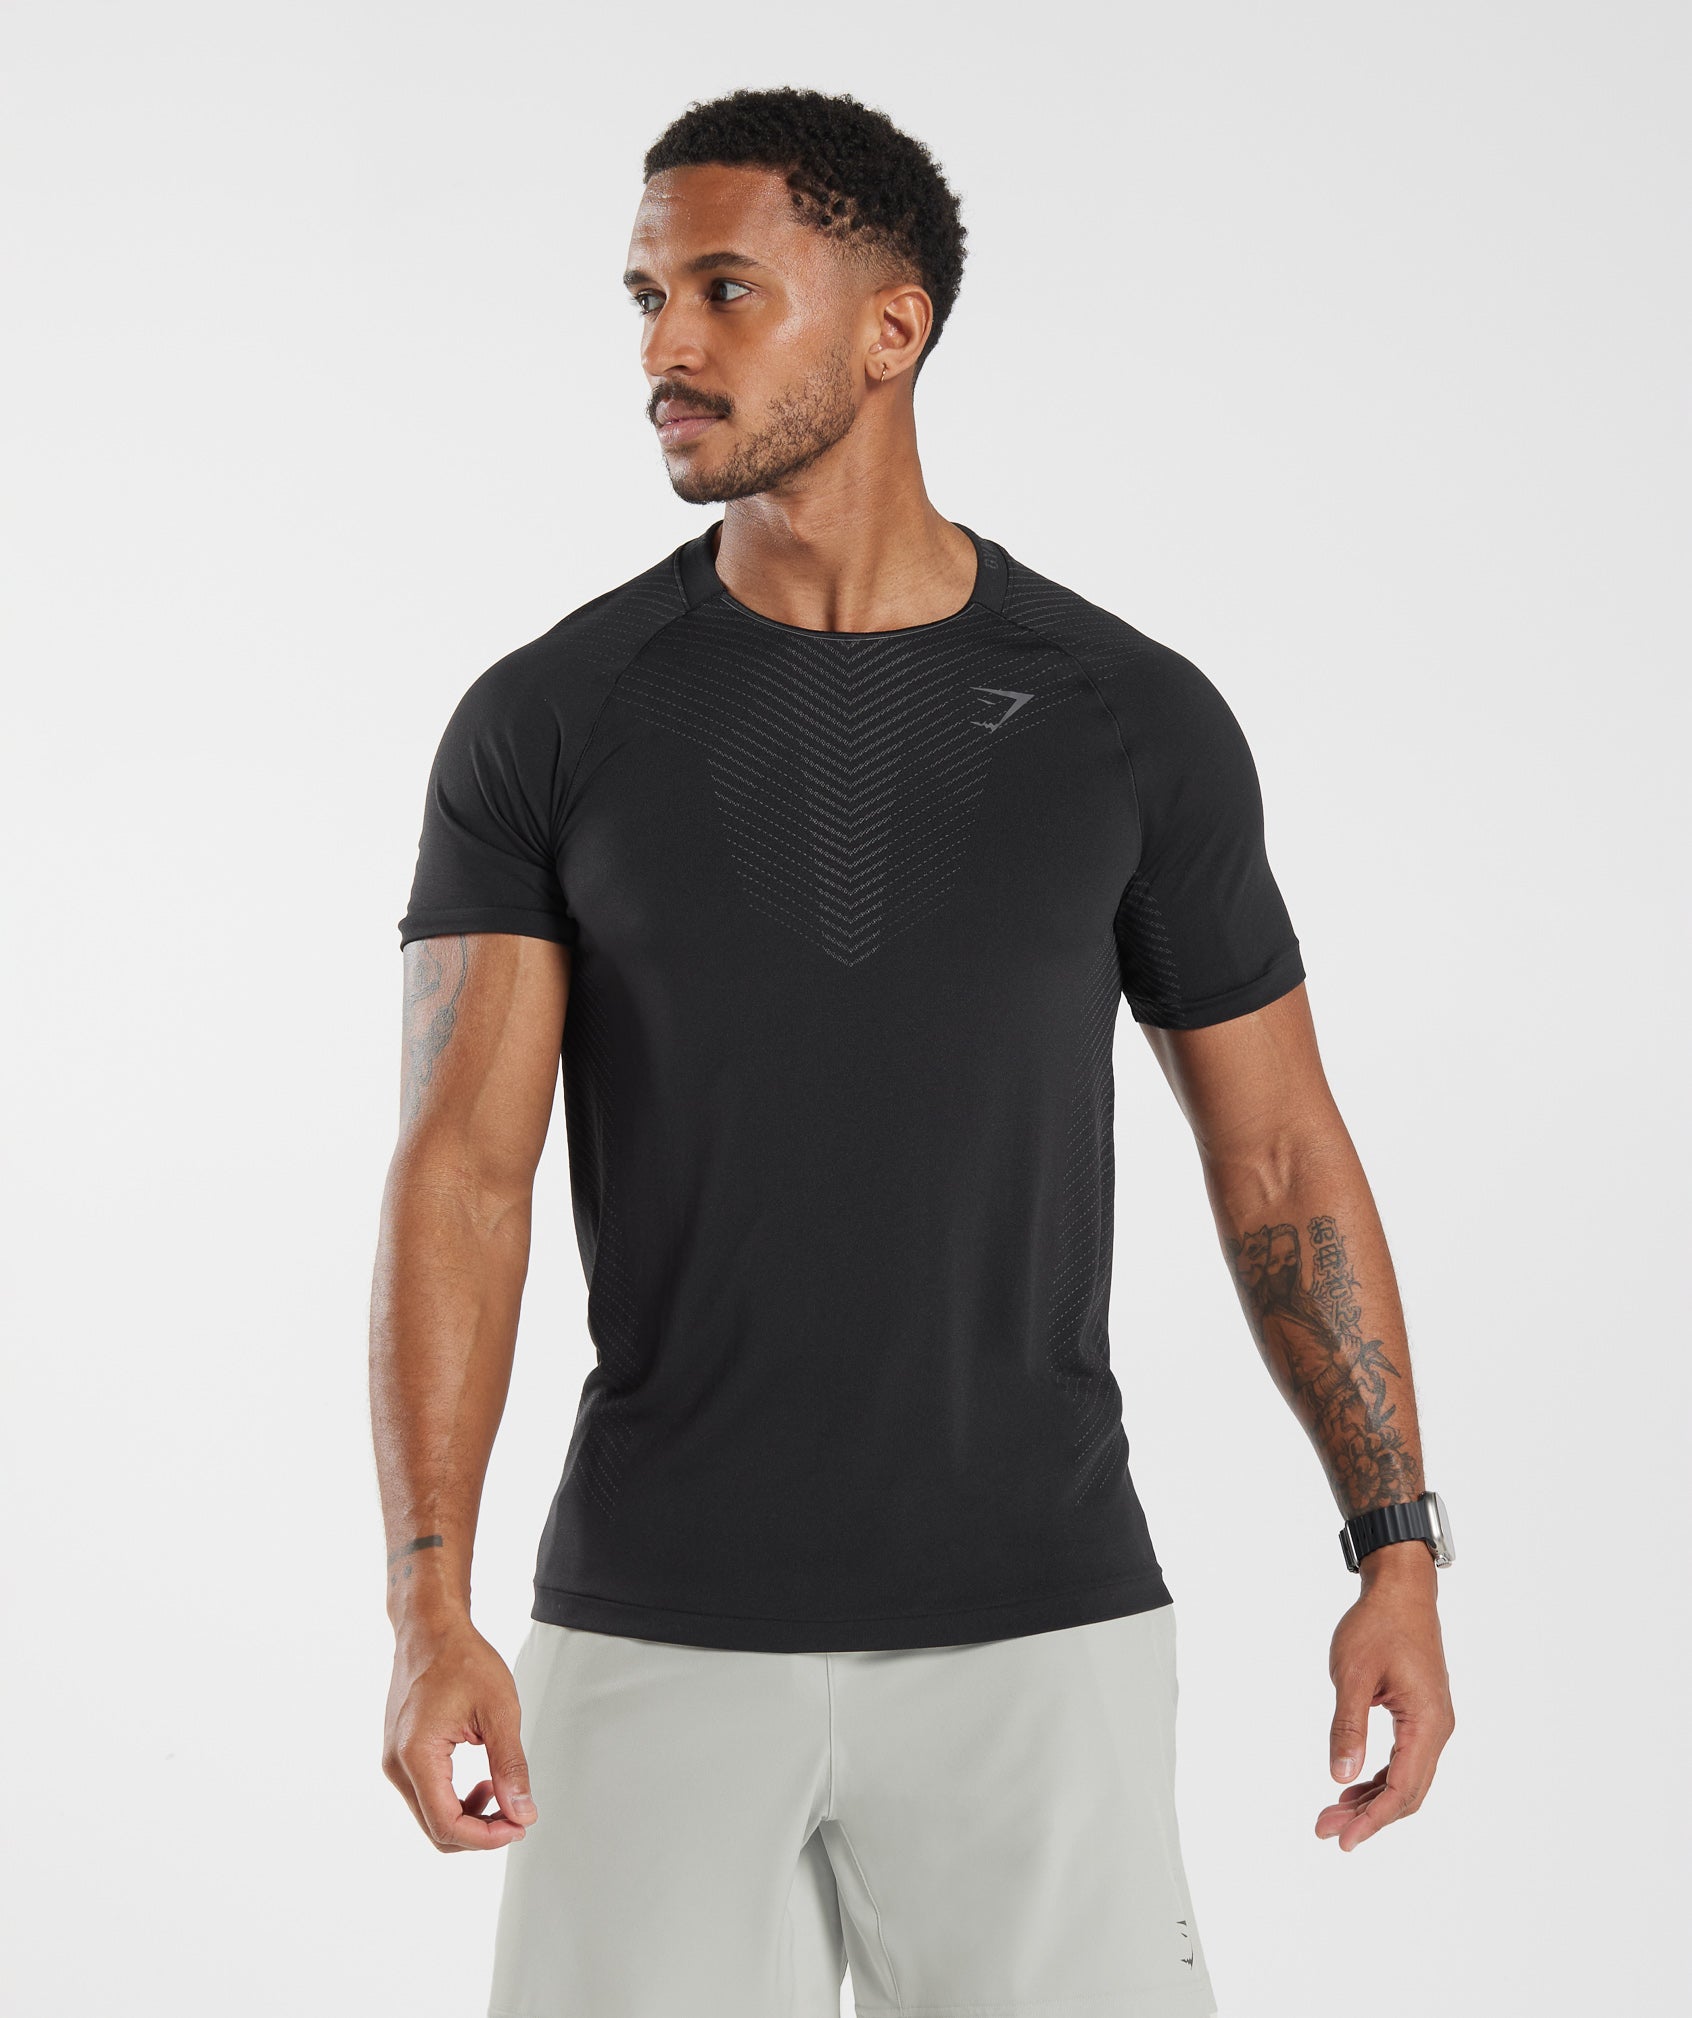 Gymshark Apex Seamless T-Shirt - Black/Silhouette Grey | Gymshark